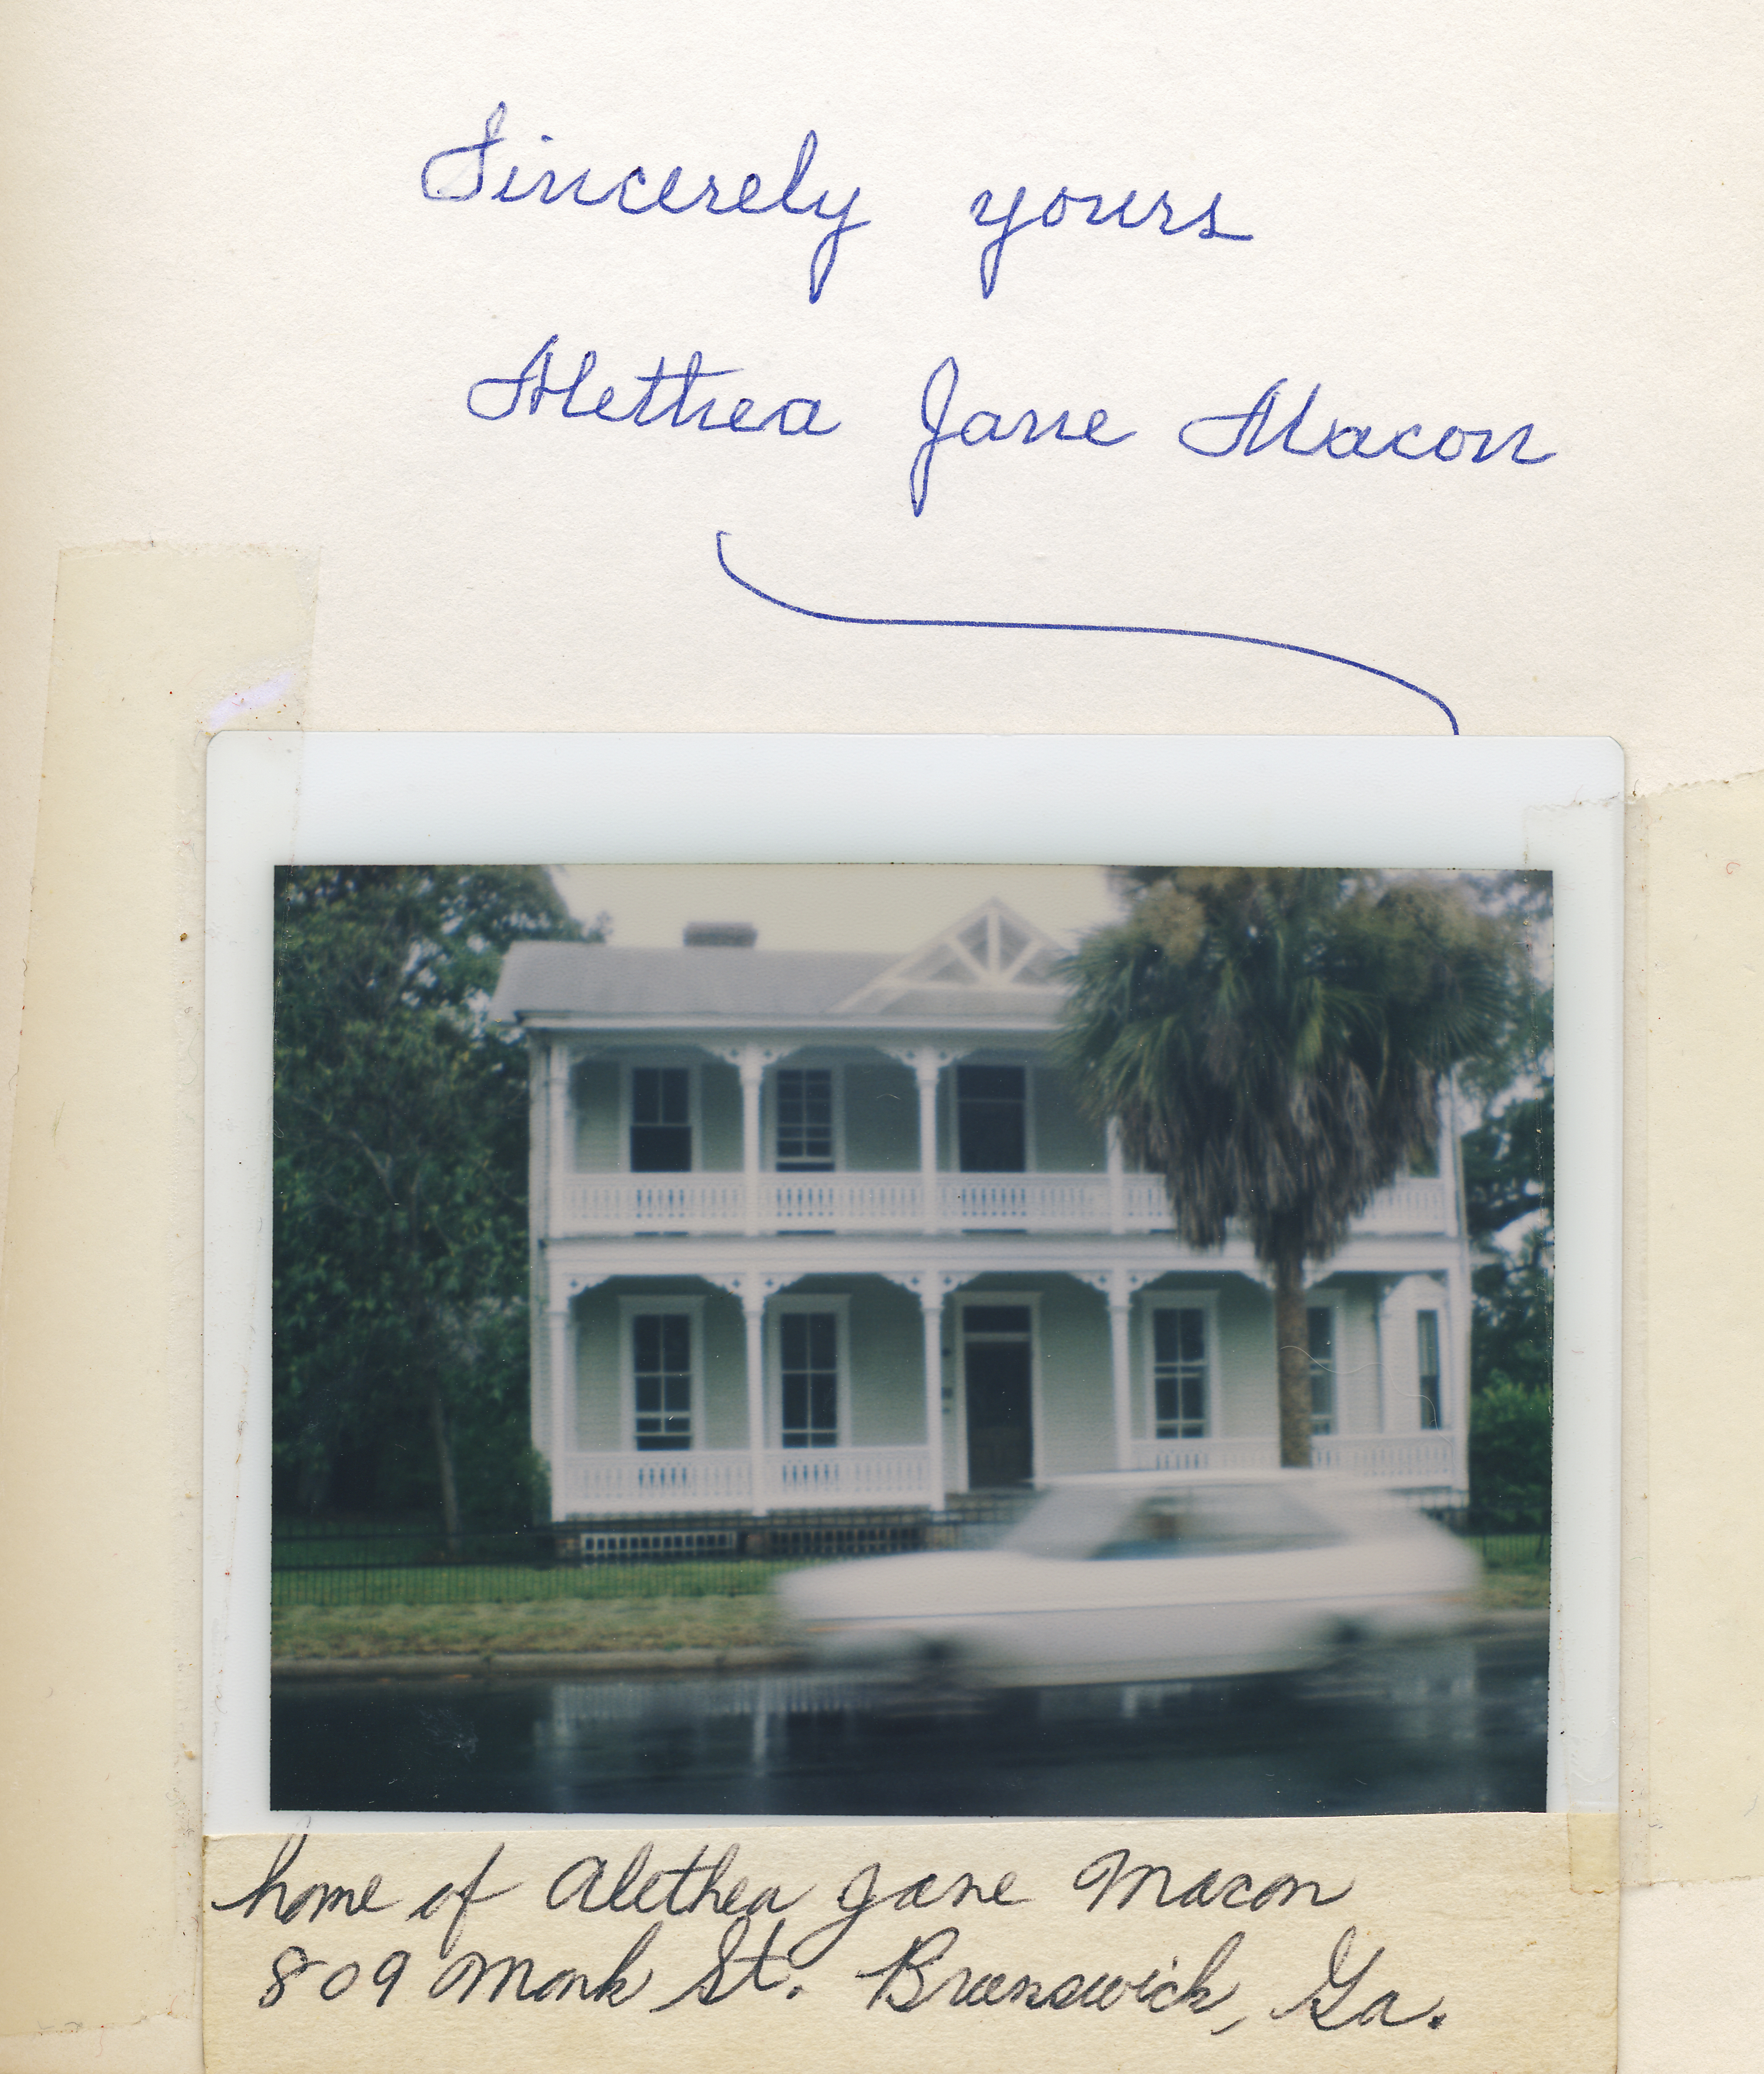 Alethea Jane Macon's signature and home